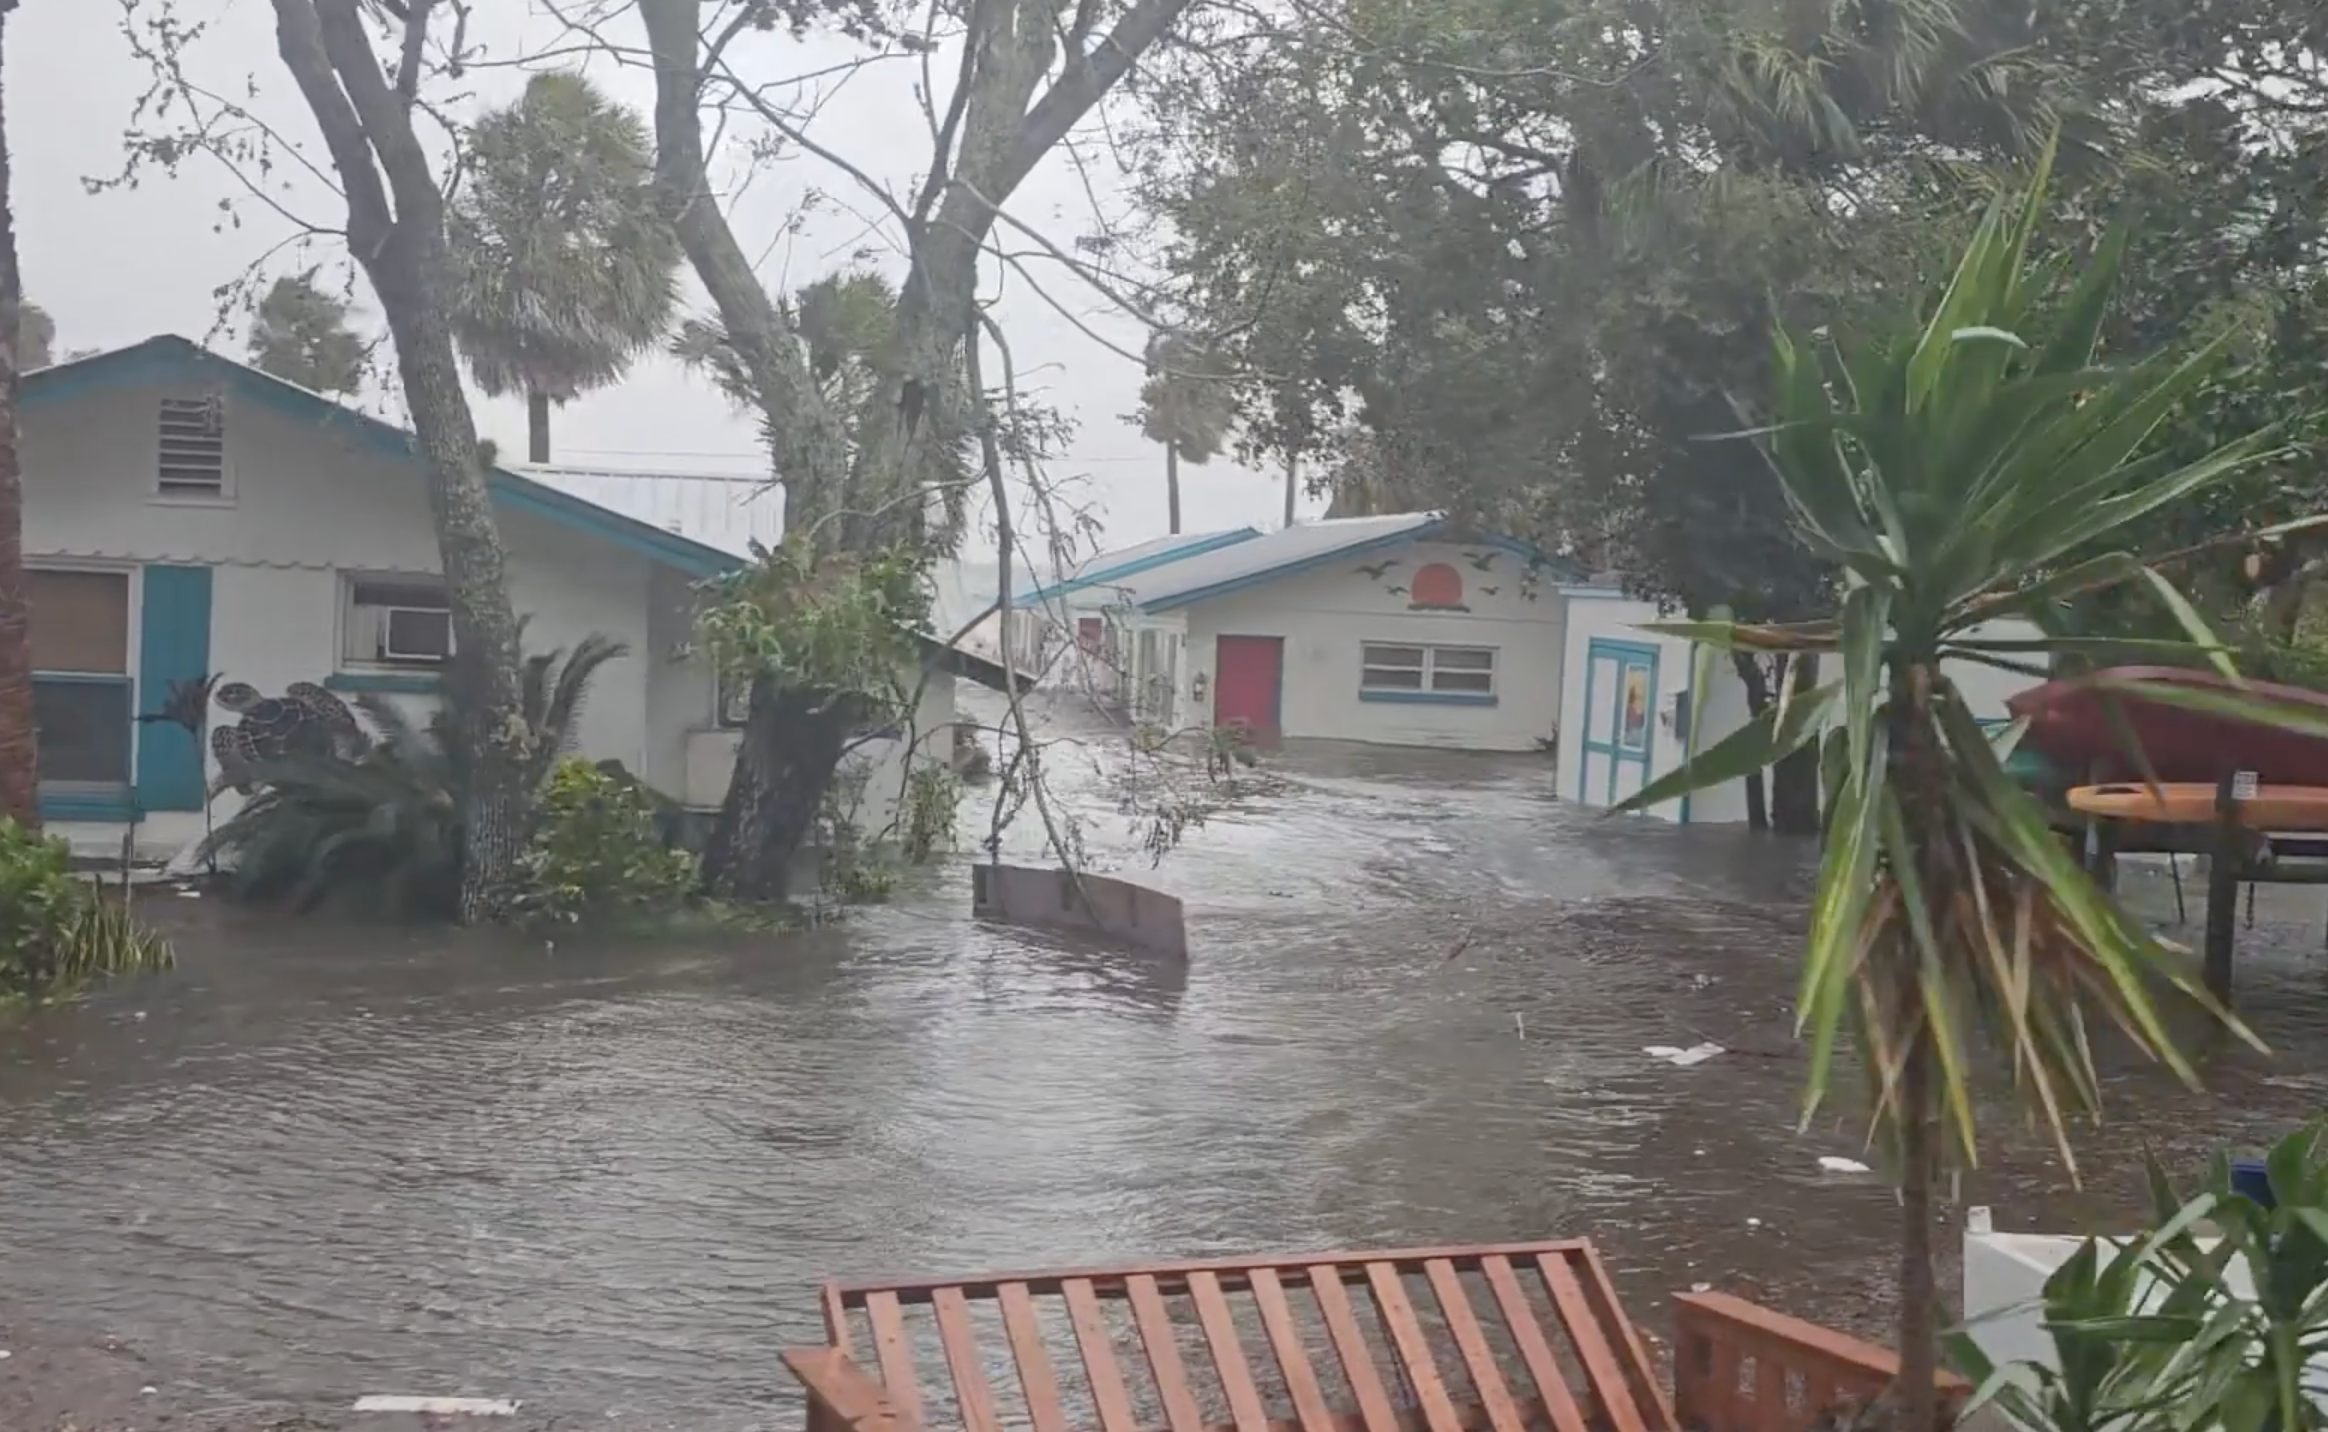 Cedar Key island, a small community in Big Bend, Florida was inundated with water during Hurricane Idalia